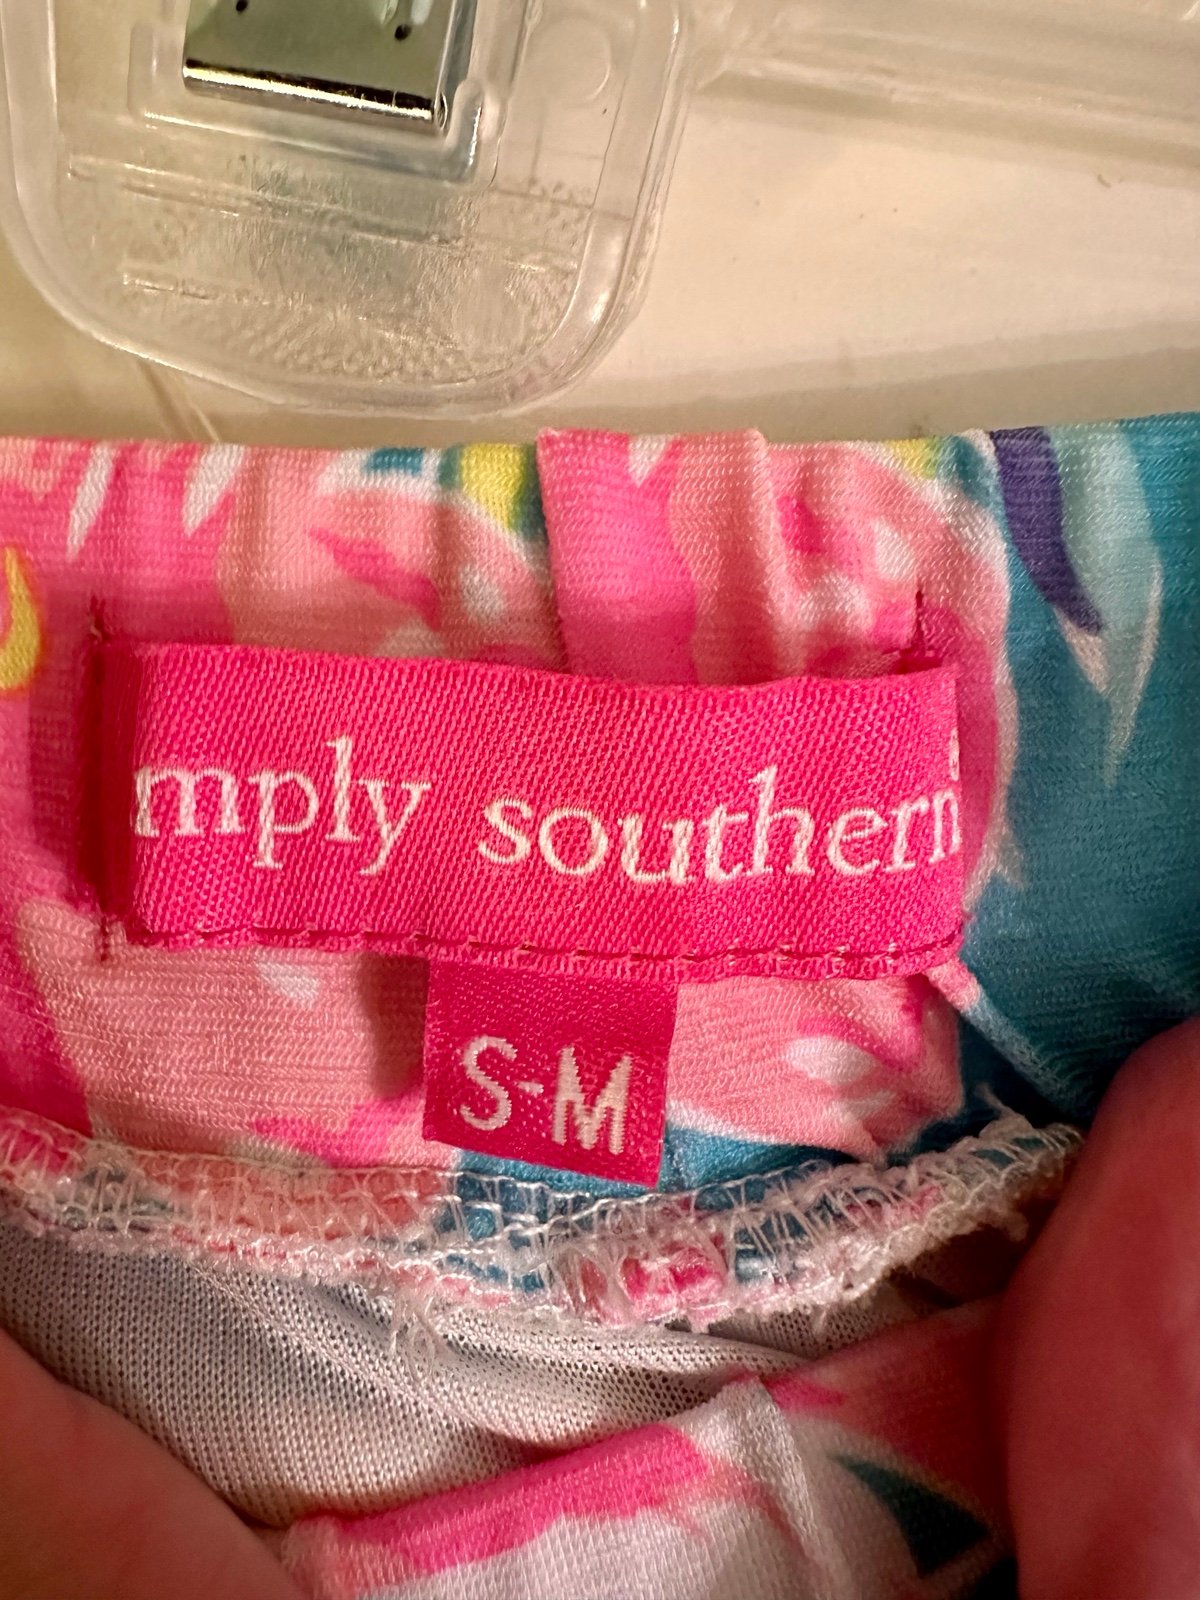 Buy Simply Southern - Floral Pom Pom Shorts - Brand New Condition! GtnNF47JU Hot Sale